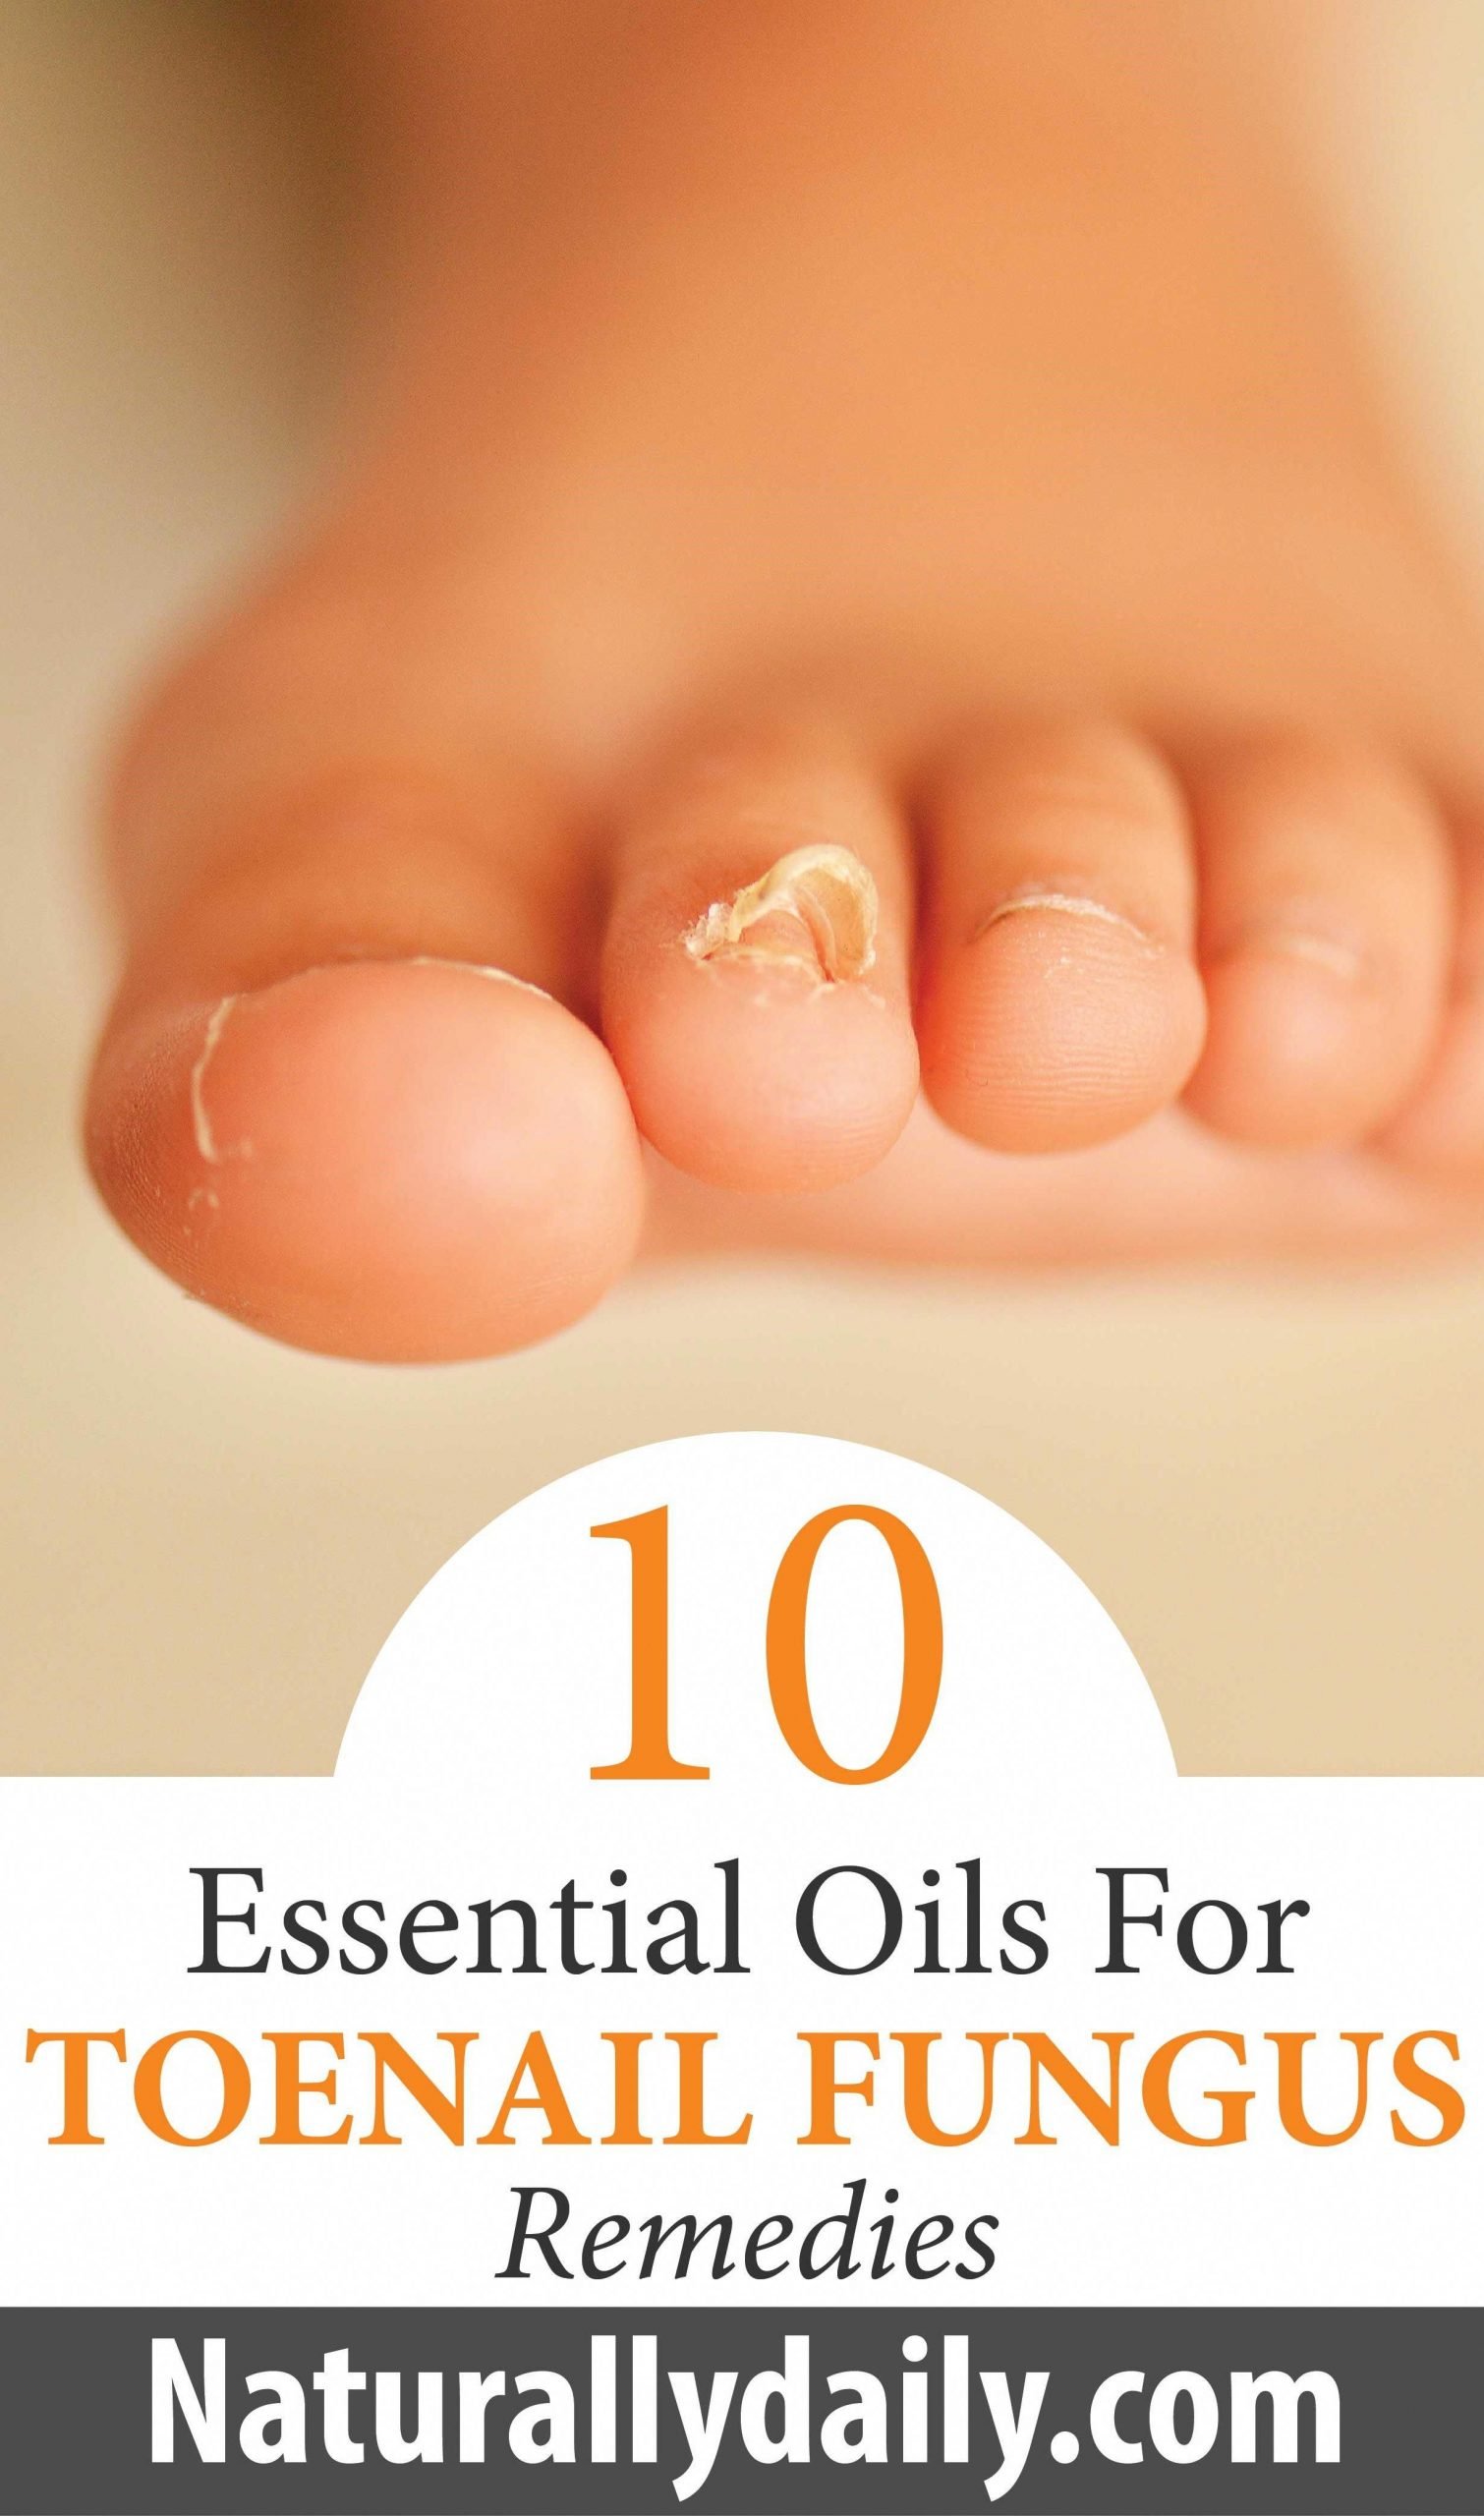 10 Essential Oils for Toenail fungus Remedies in 2020 ...